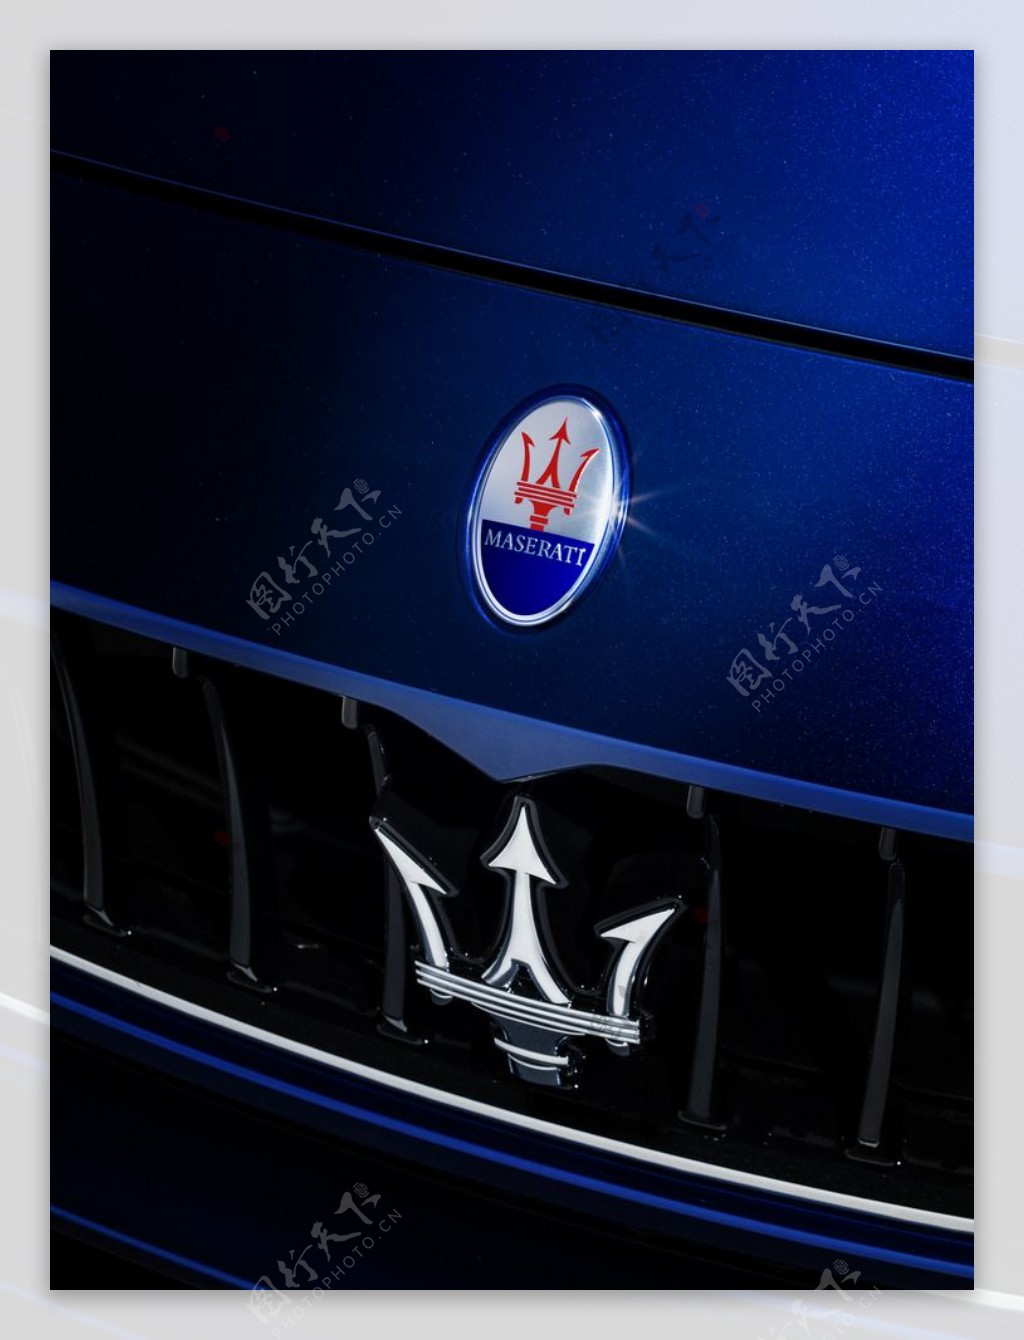 玛莎拉蒂Maserati